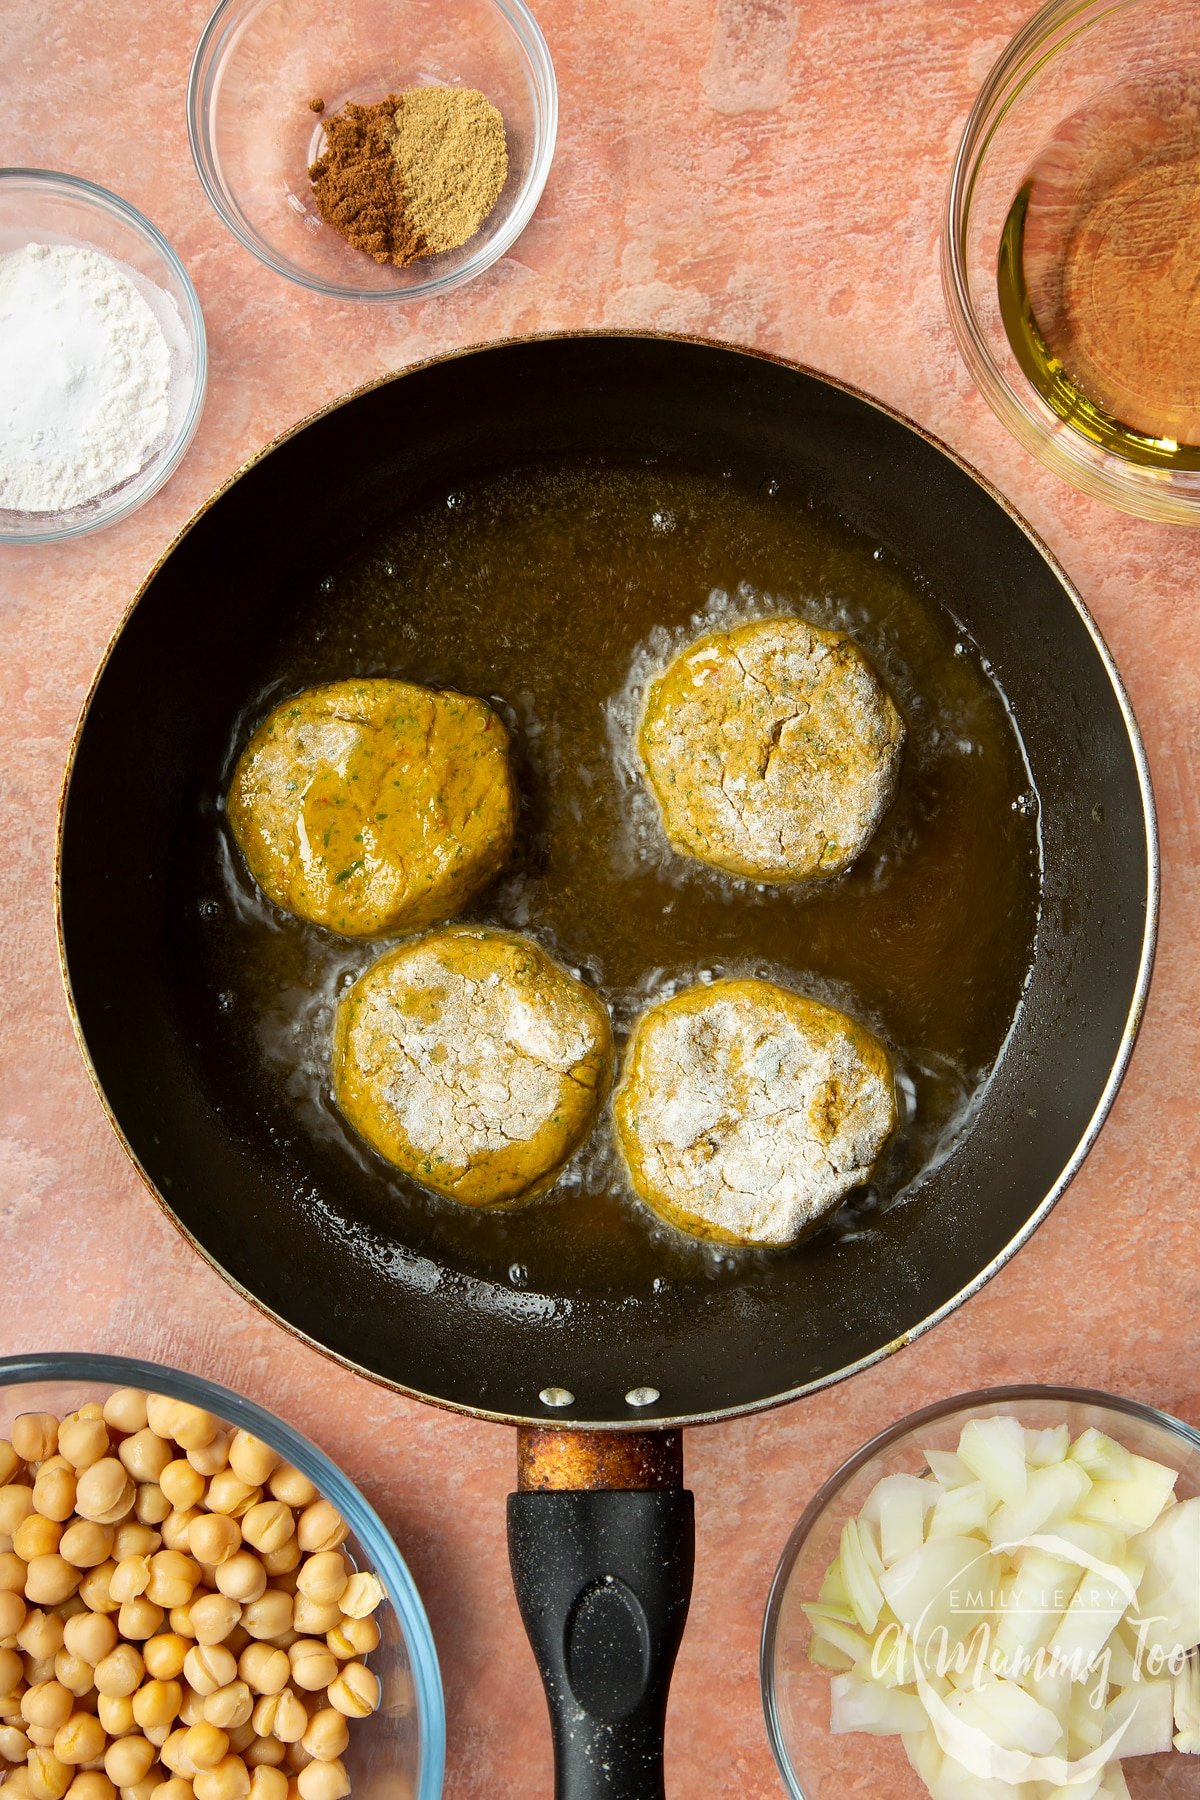 Four harissa falafel patties shallow frying in a pan.